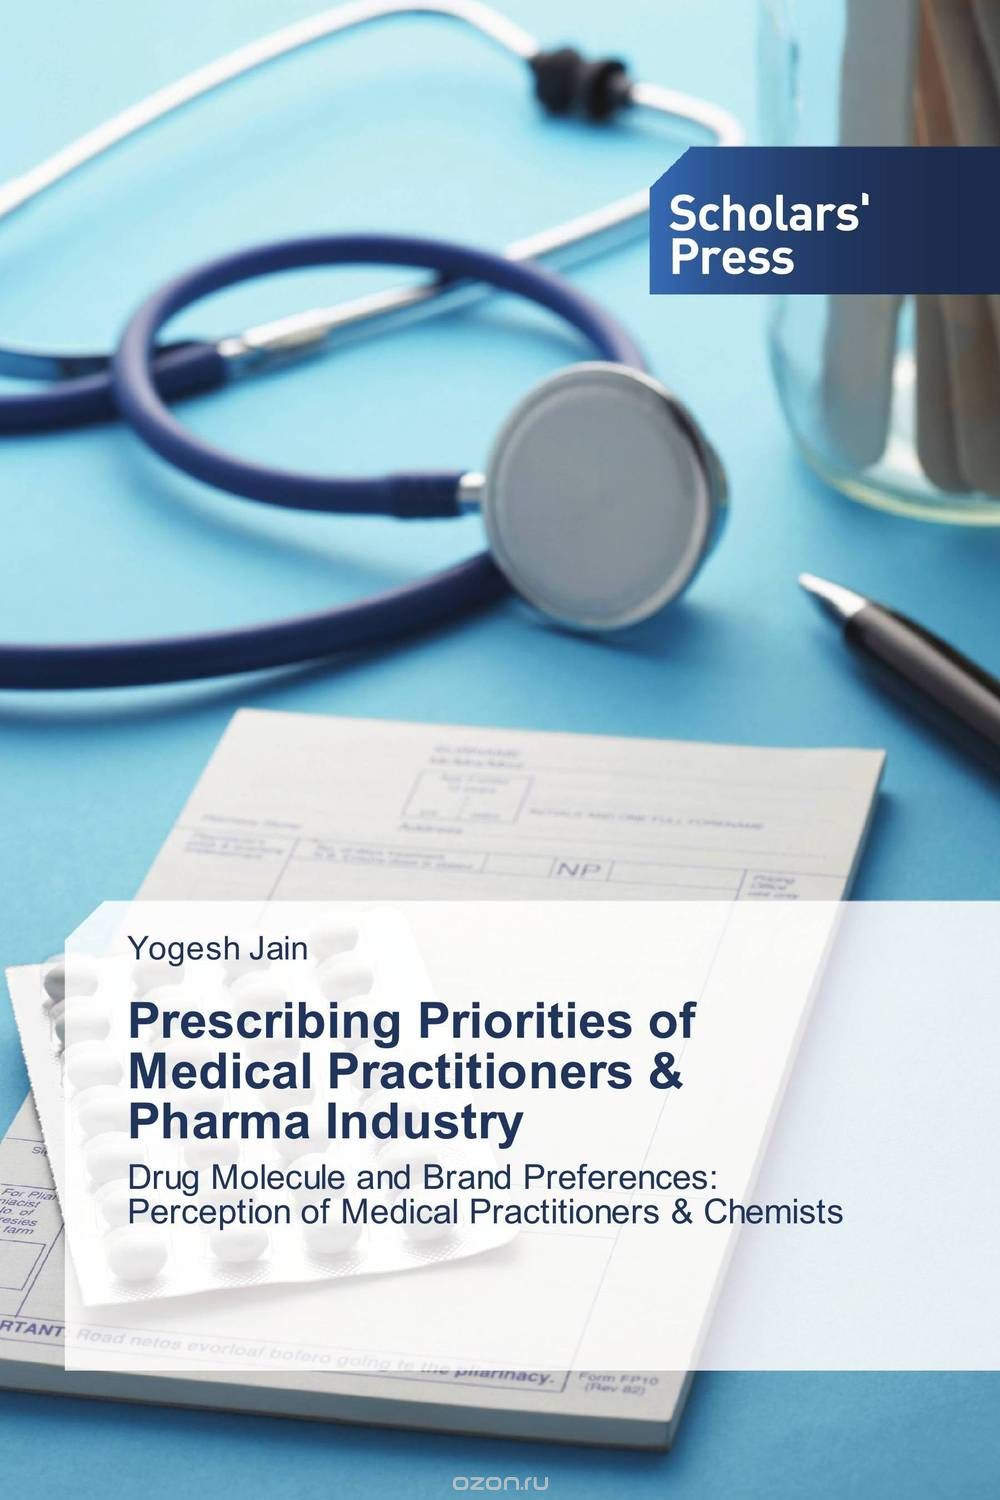 Скачать книгу "Prescribing Priorities of Medical Practitioners & Pharma Industry"